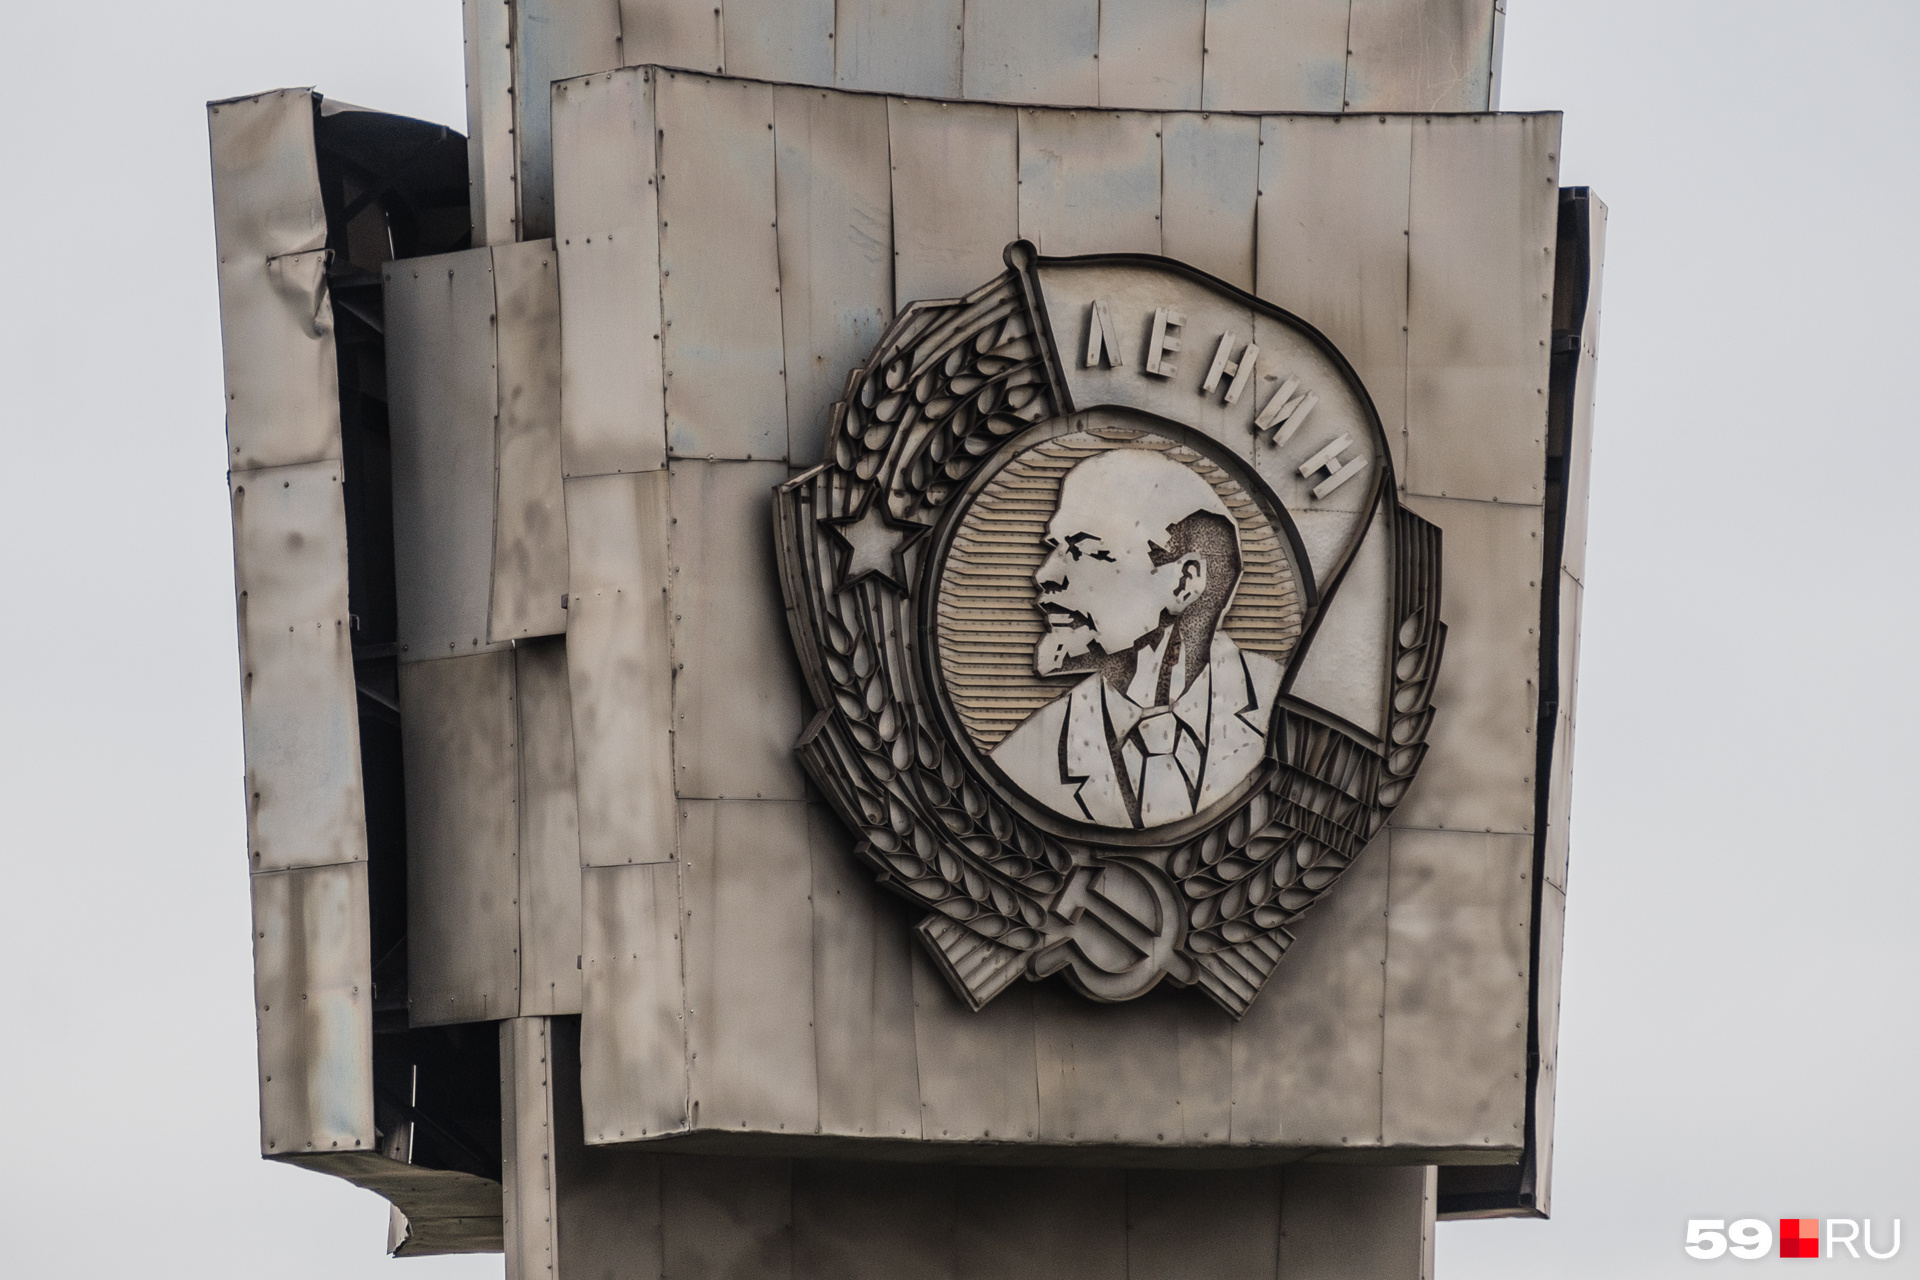 Стелу украшают Орден Ленина и лозунги